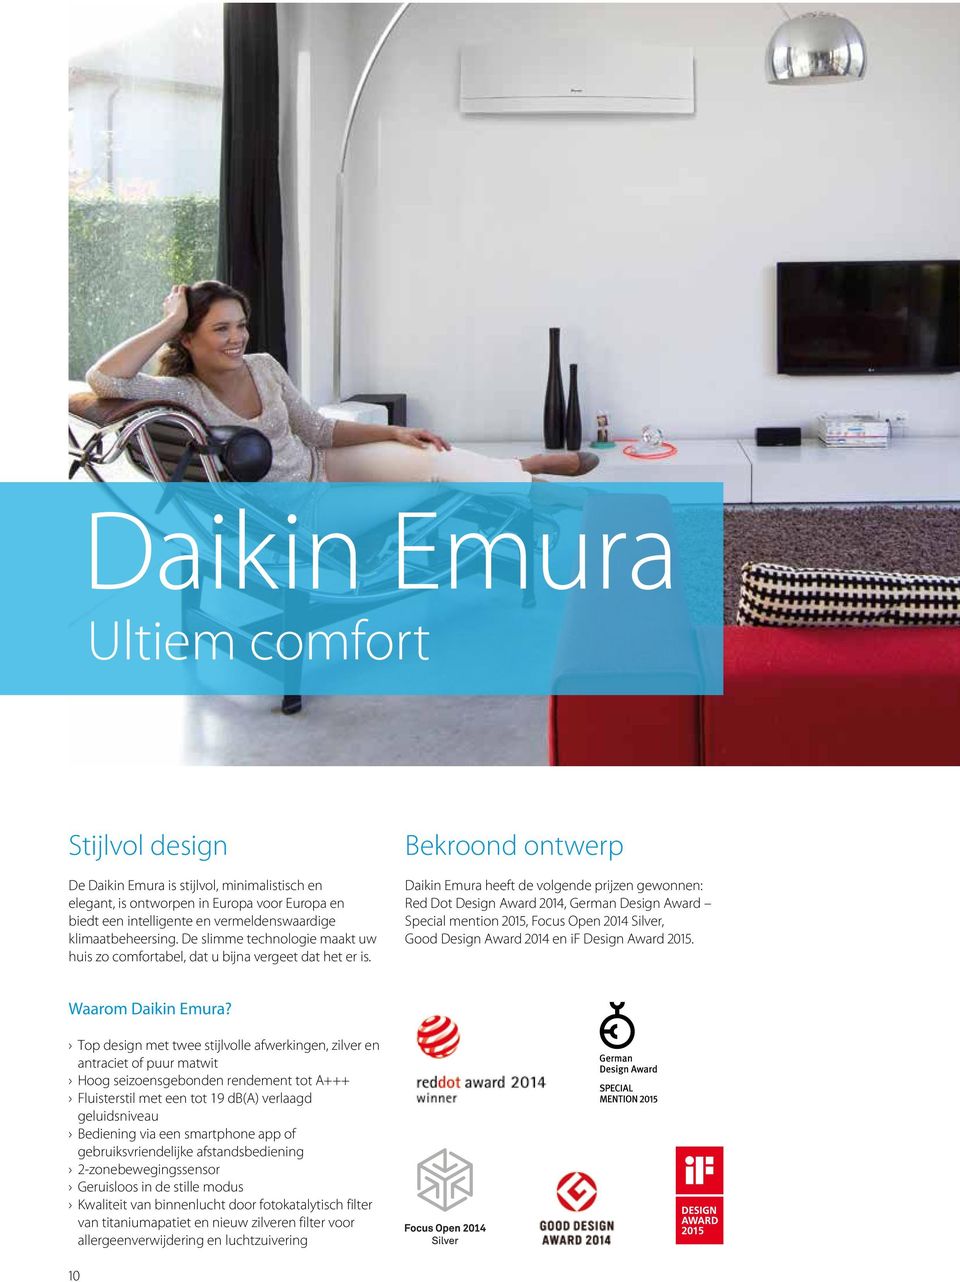 Bekroond ontwerp Daikin Emura heeft de volgende prijzen gewonnen: Red Dot Design Award 2014, German Design Award Special mention 2015, Focus Open 2014 Silver, Good Design Award 2014 en if Design